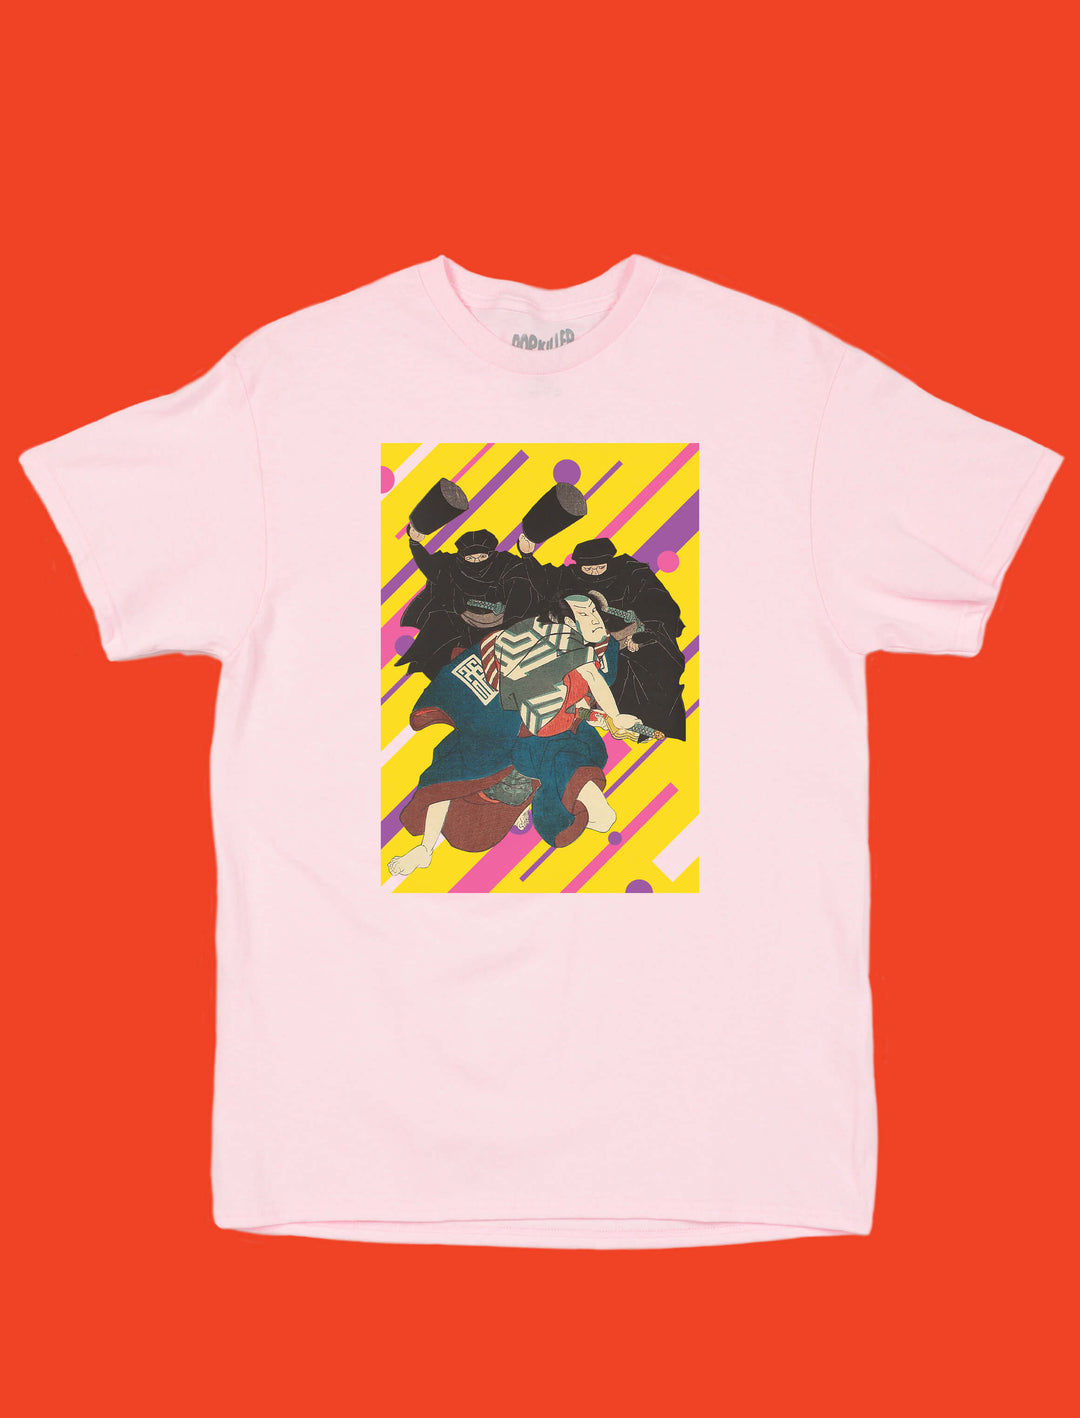 Pink 80s Memphis style ninjas graphic t-shirt.